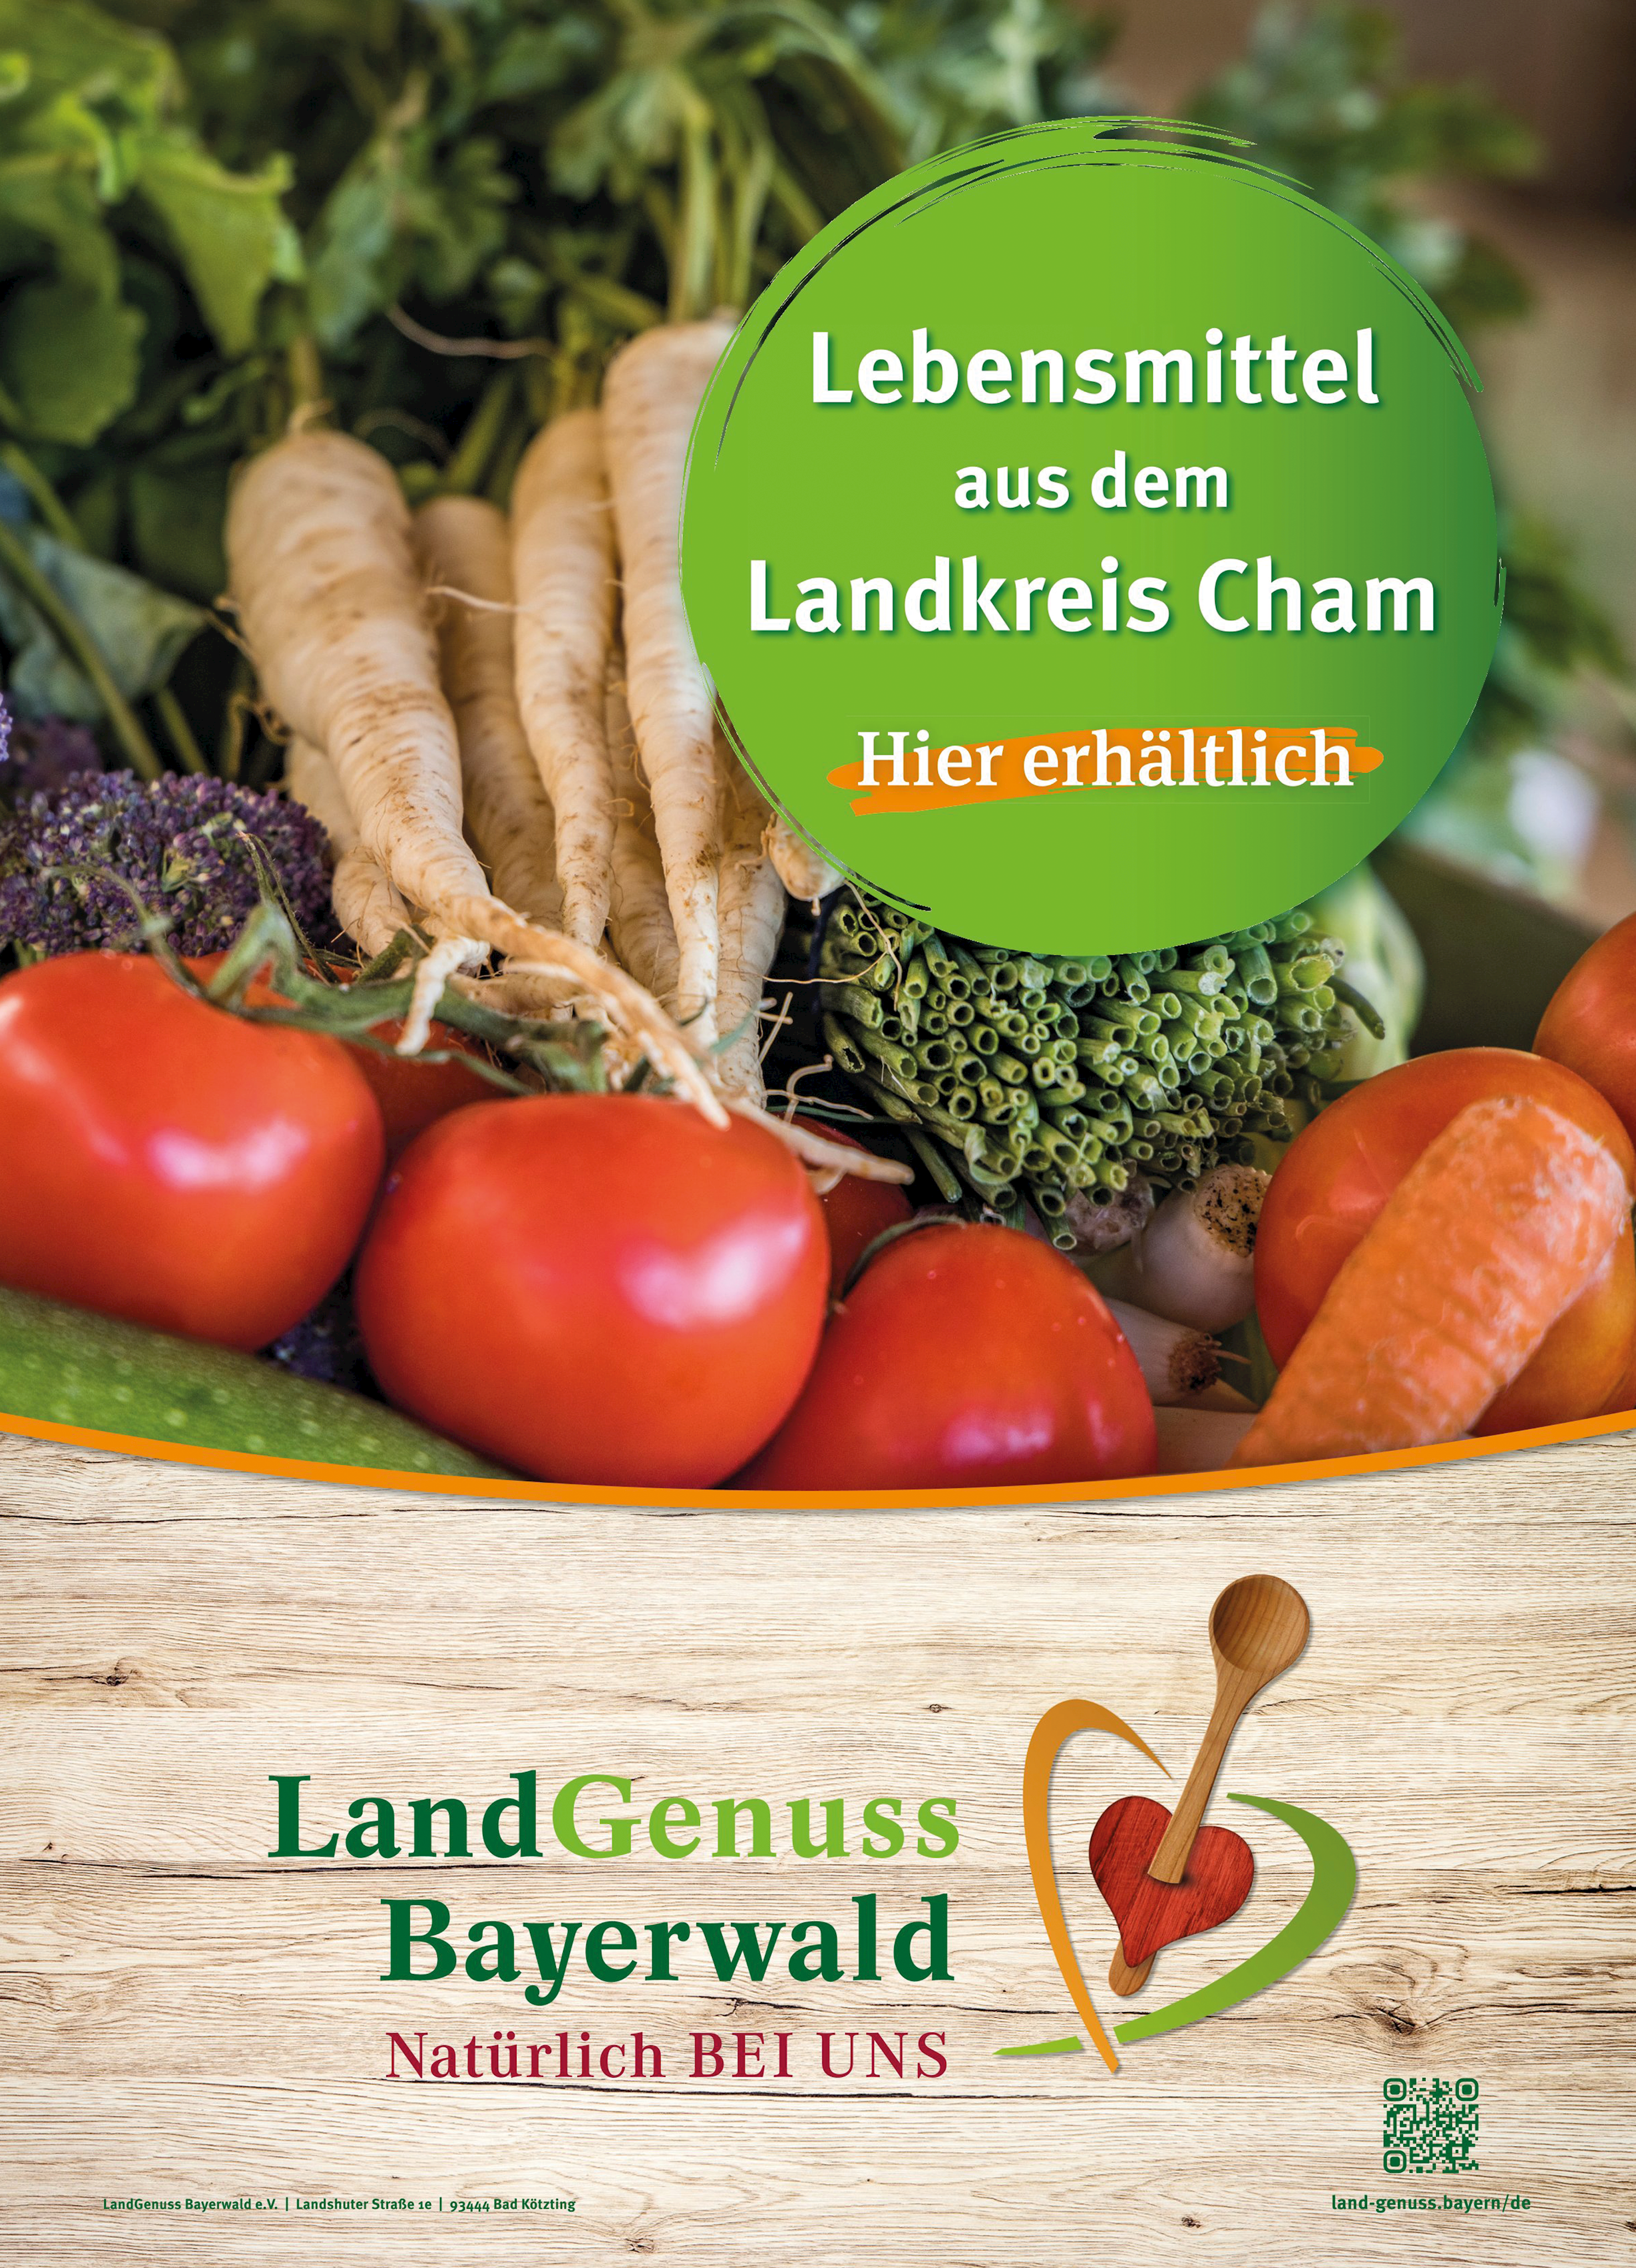 Landgenuss-Plakat mit frischem regionalem Gemüse